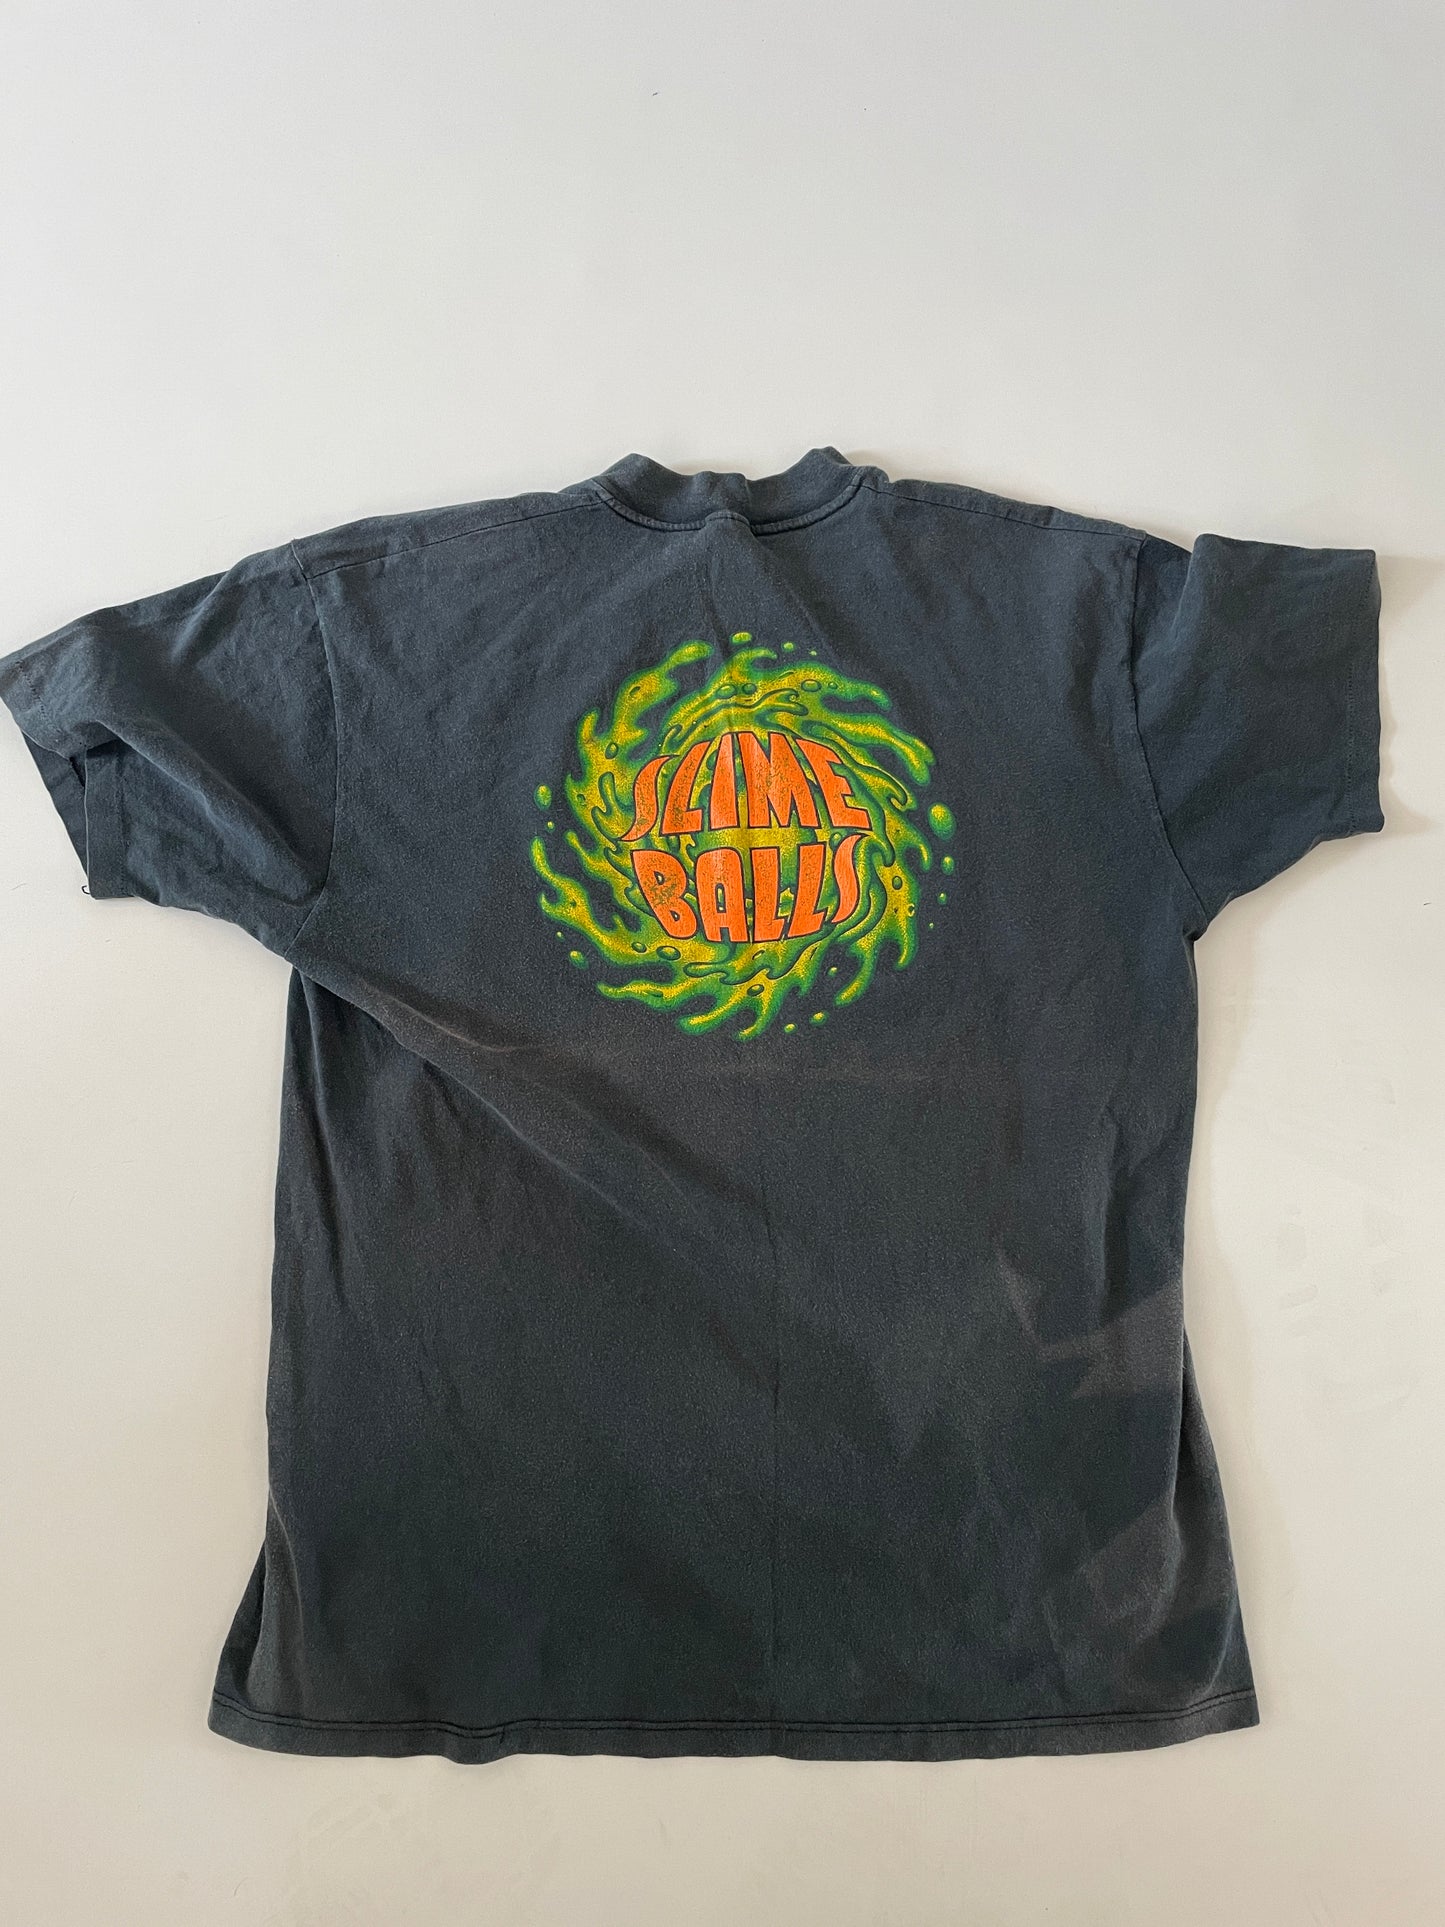 Santa Cruz 'Slime Balls' T-Shirt VINTAGE 80s